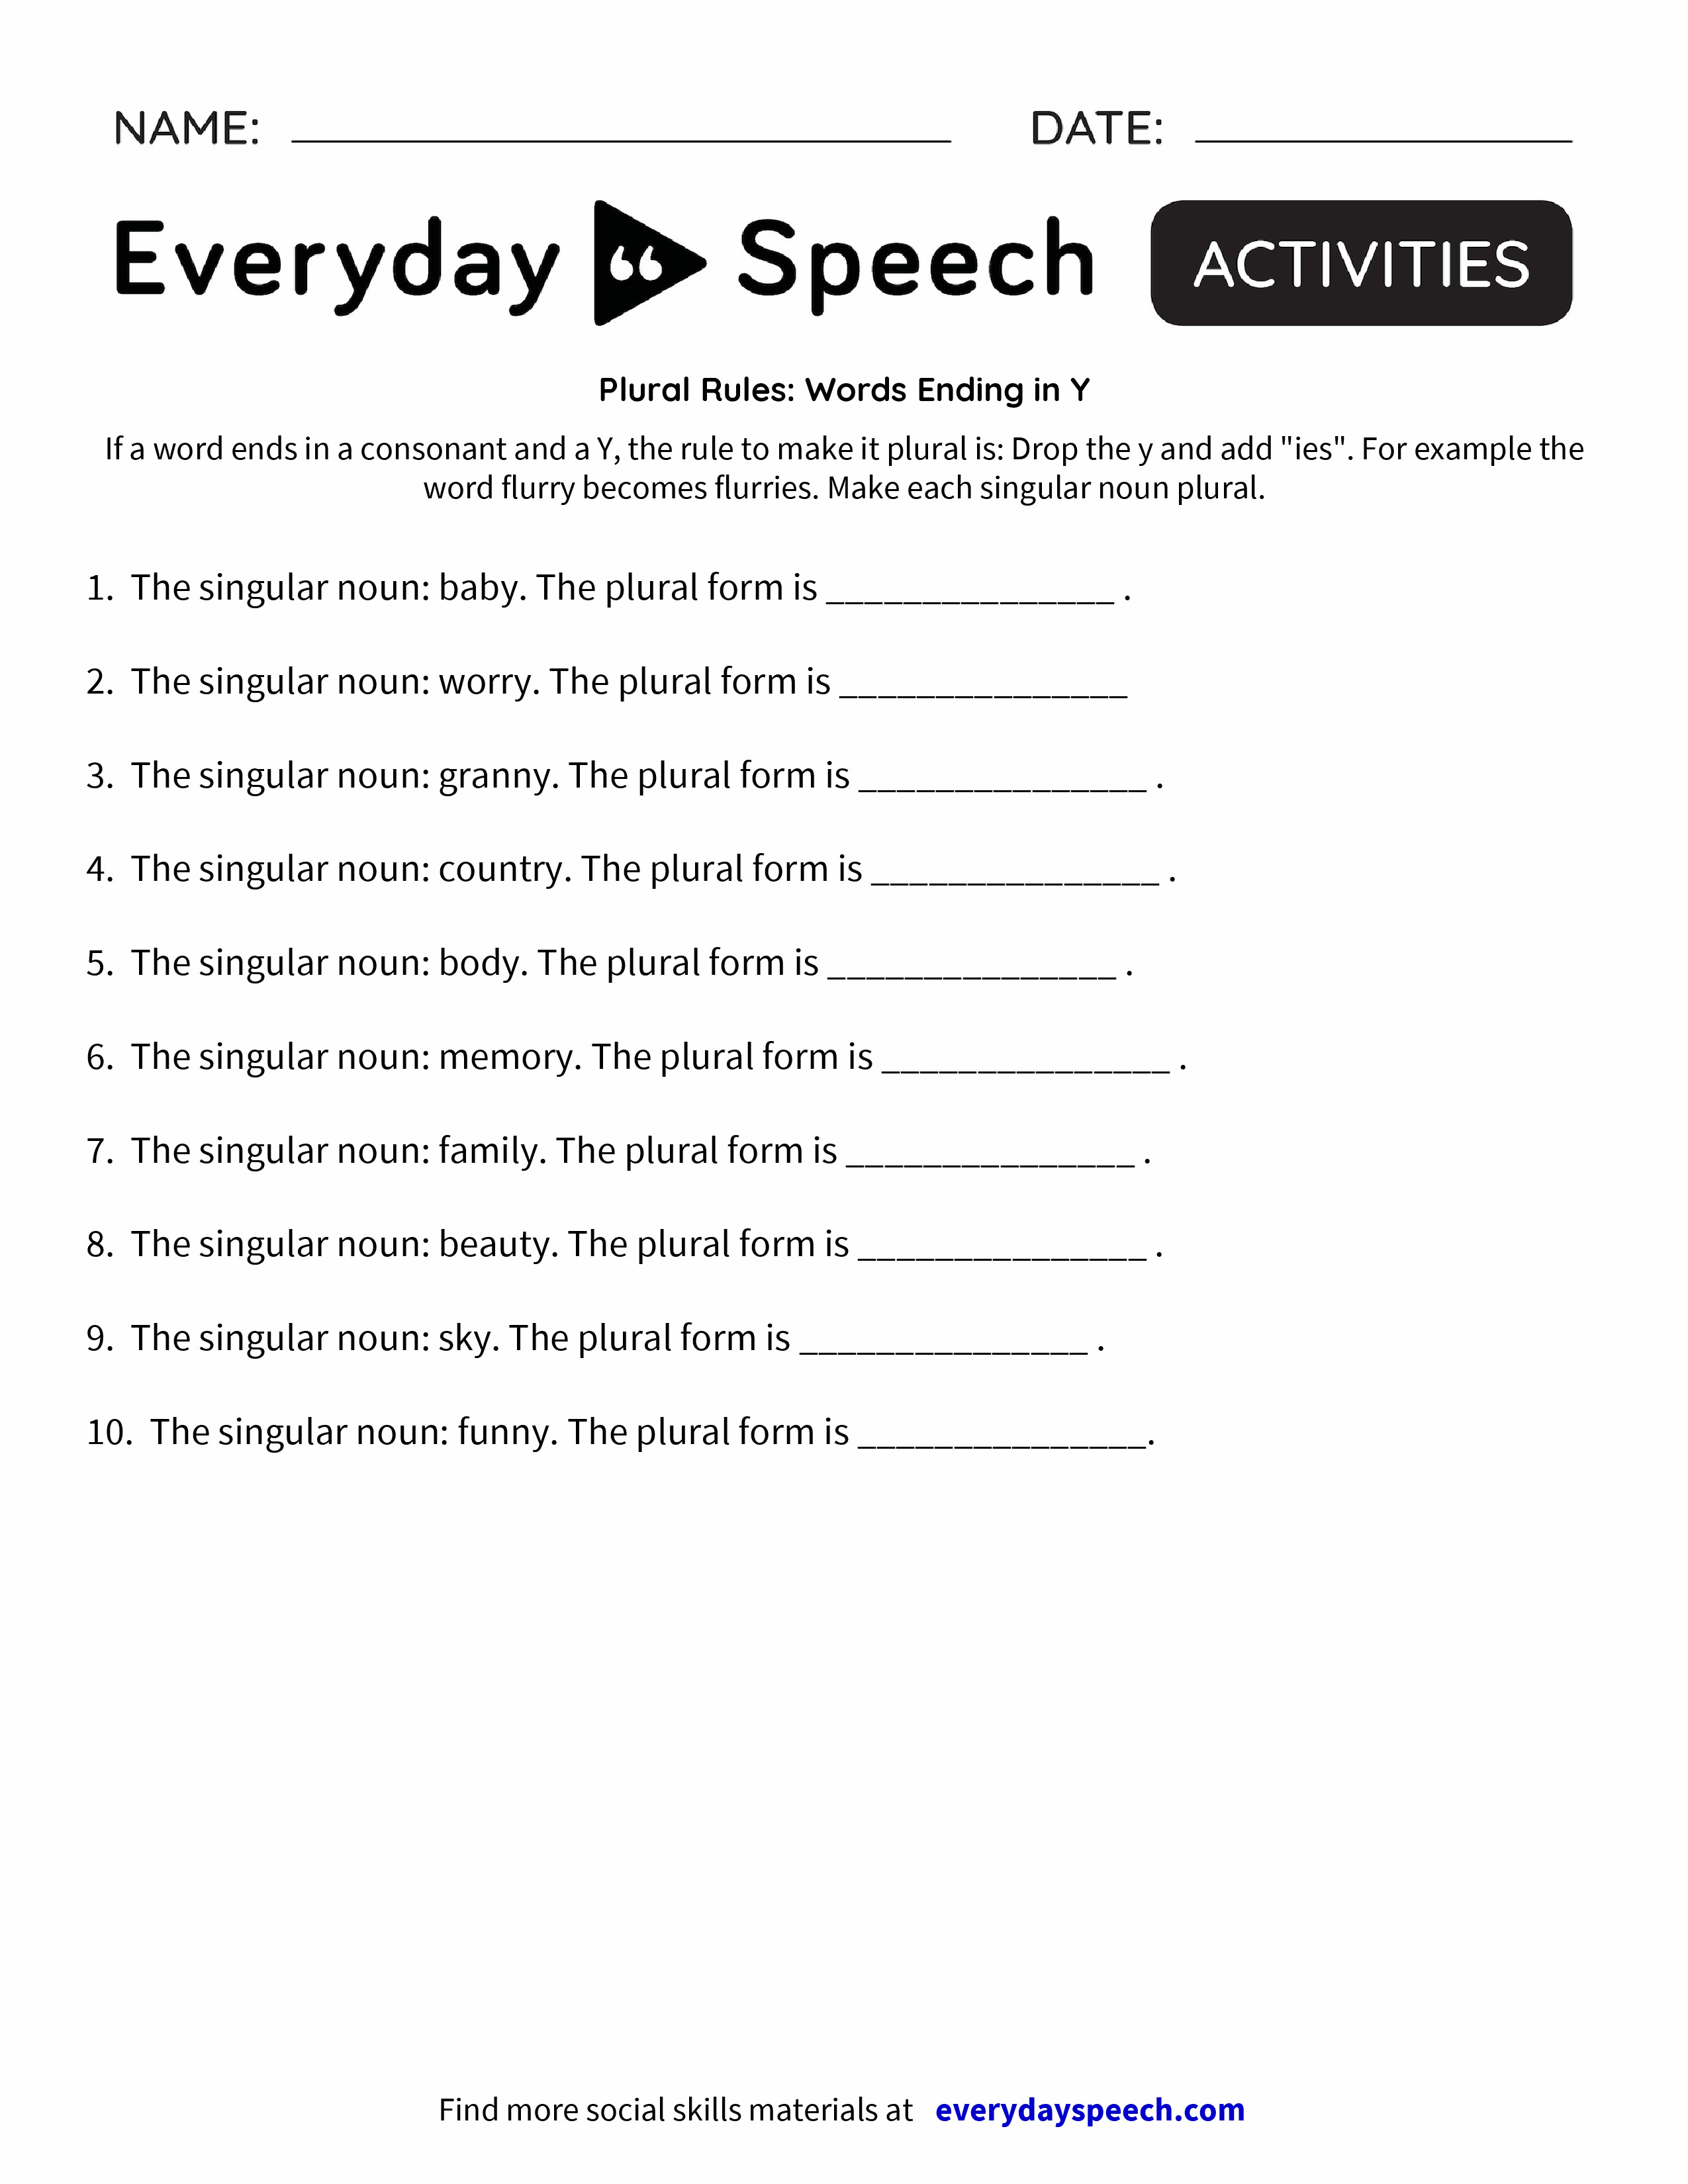 plural-rules-words-ending-in-y-everyday-speech-everyday-speech